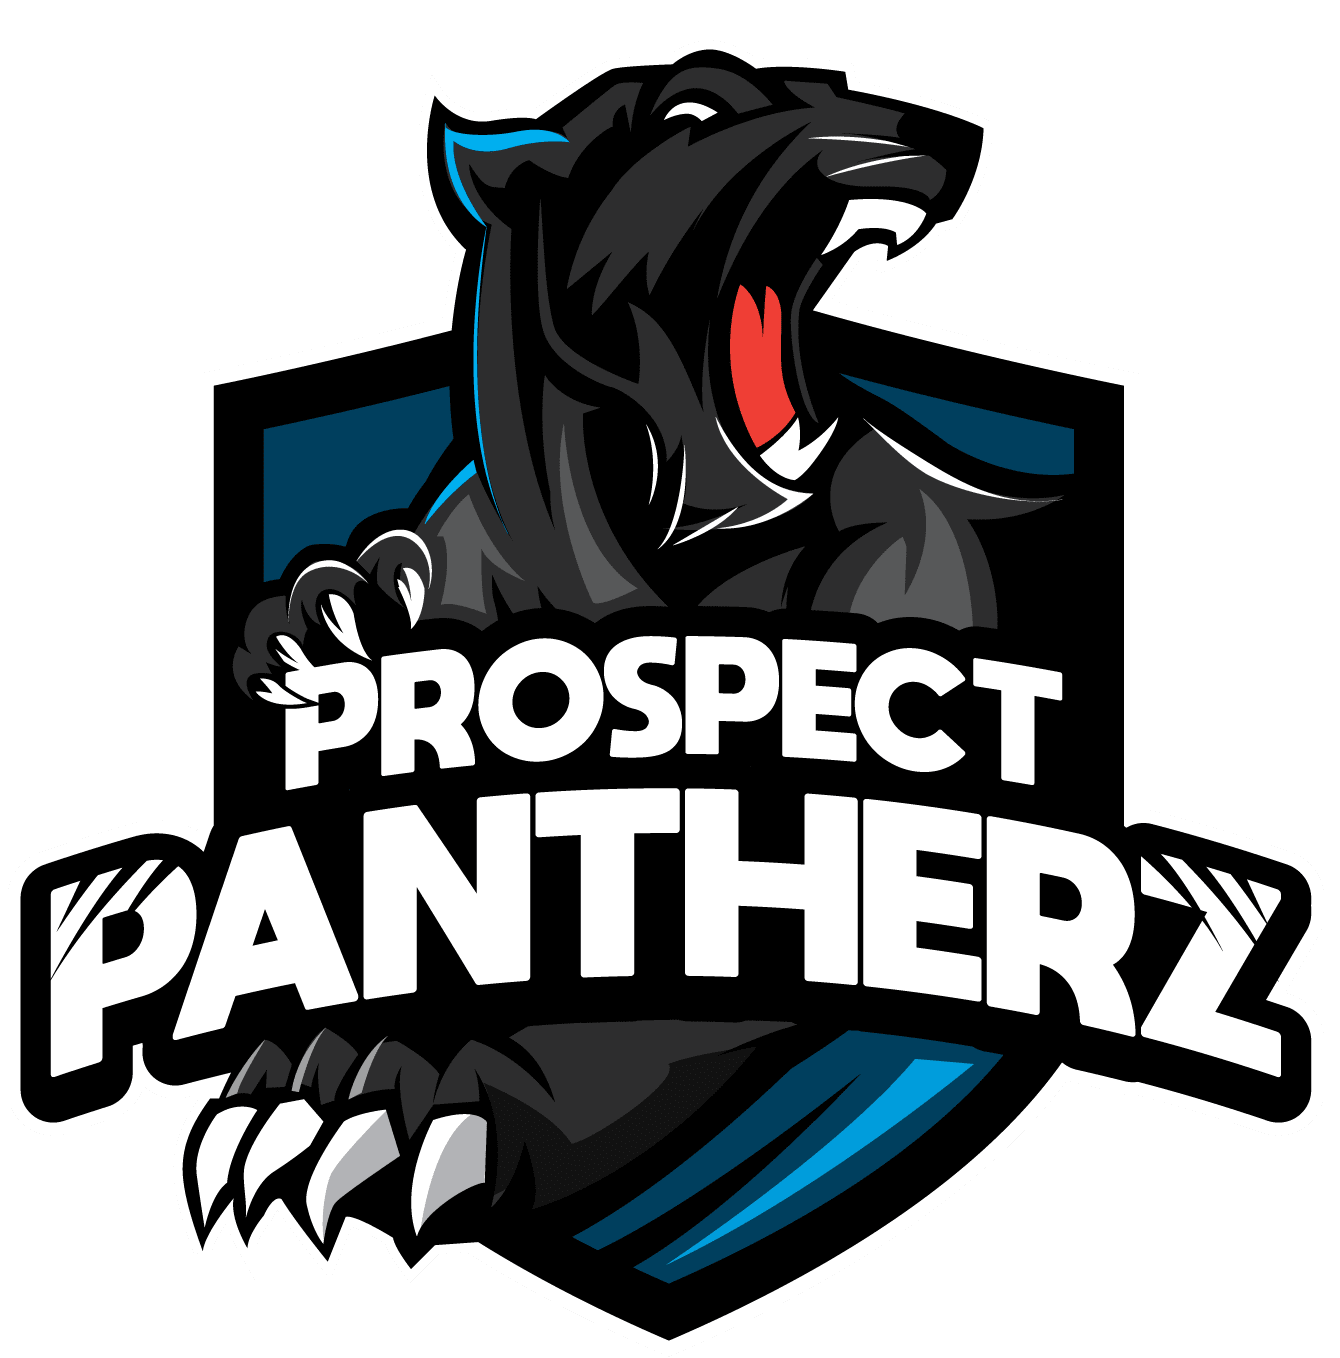 Prospect Pantherz